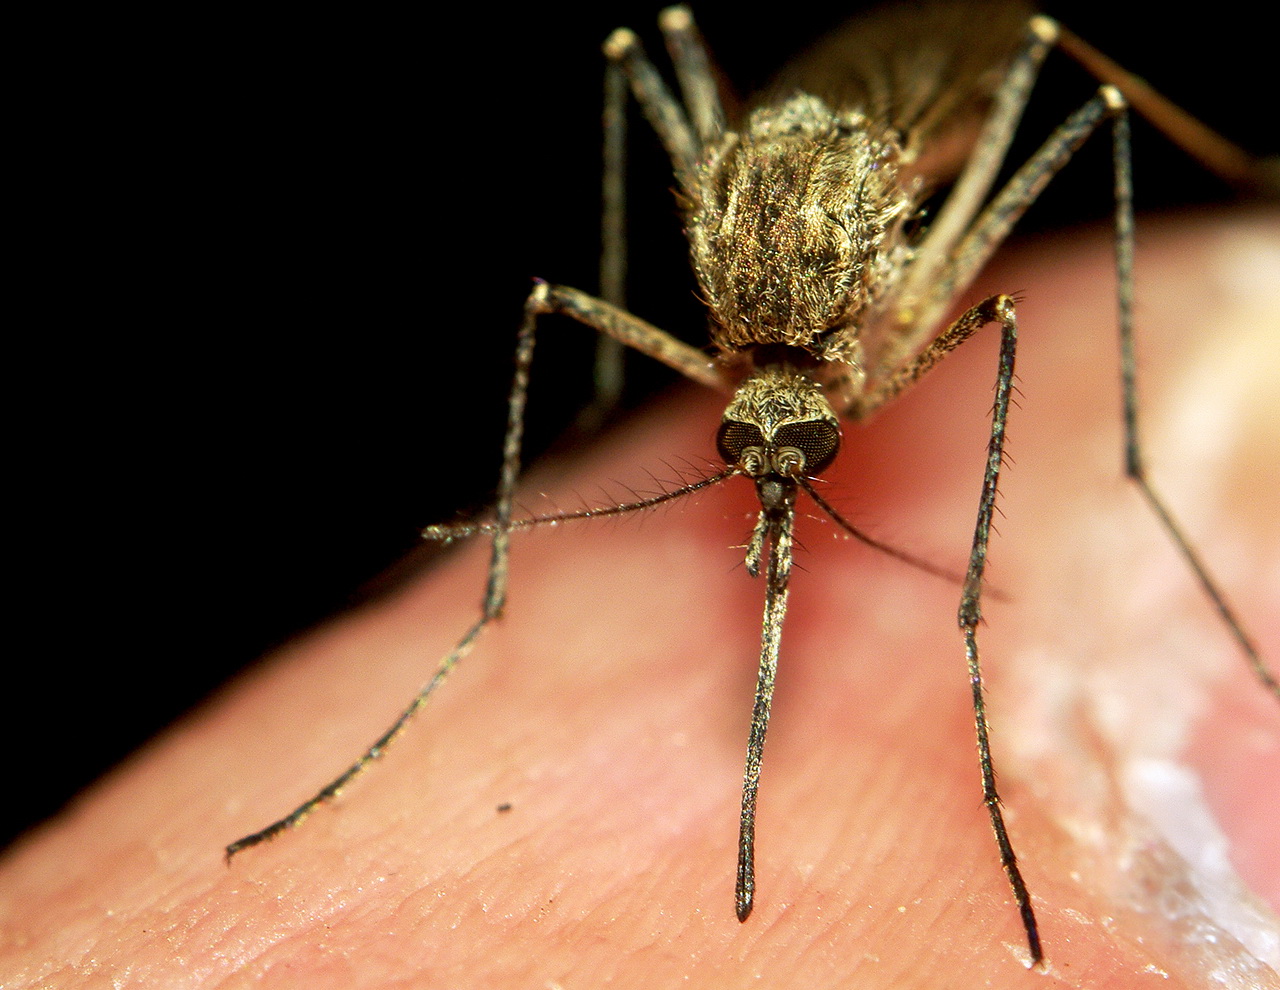 Tretman odraslih formi komaraca iz vazduha:  ČETVRTI TRETMAN U PETAK 8. SEPTEMBRA